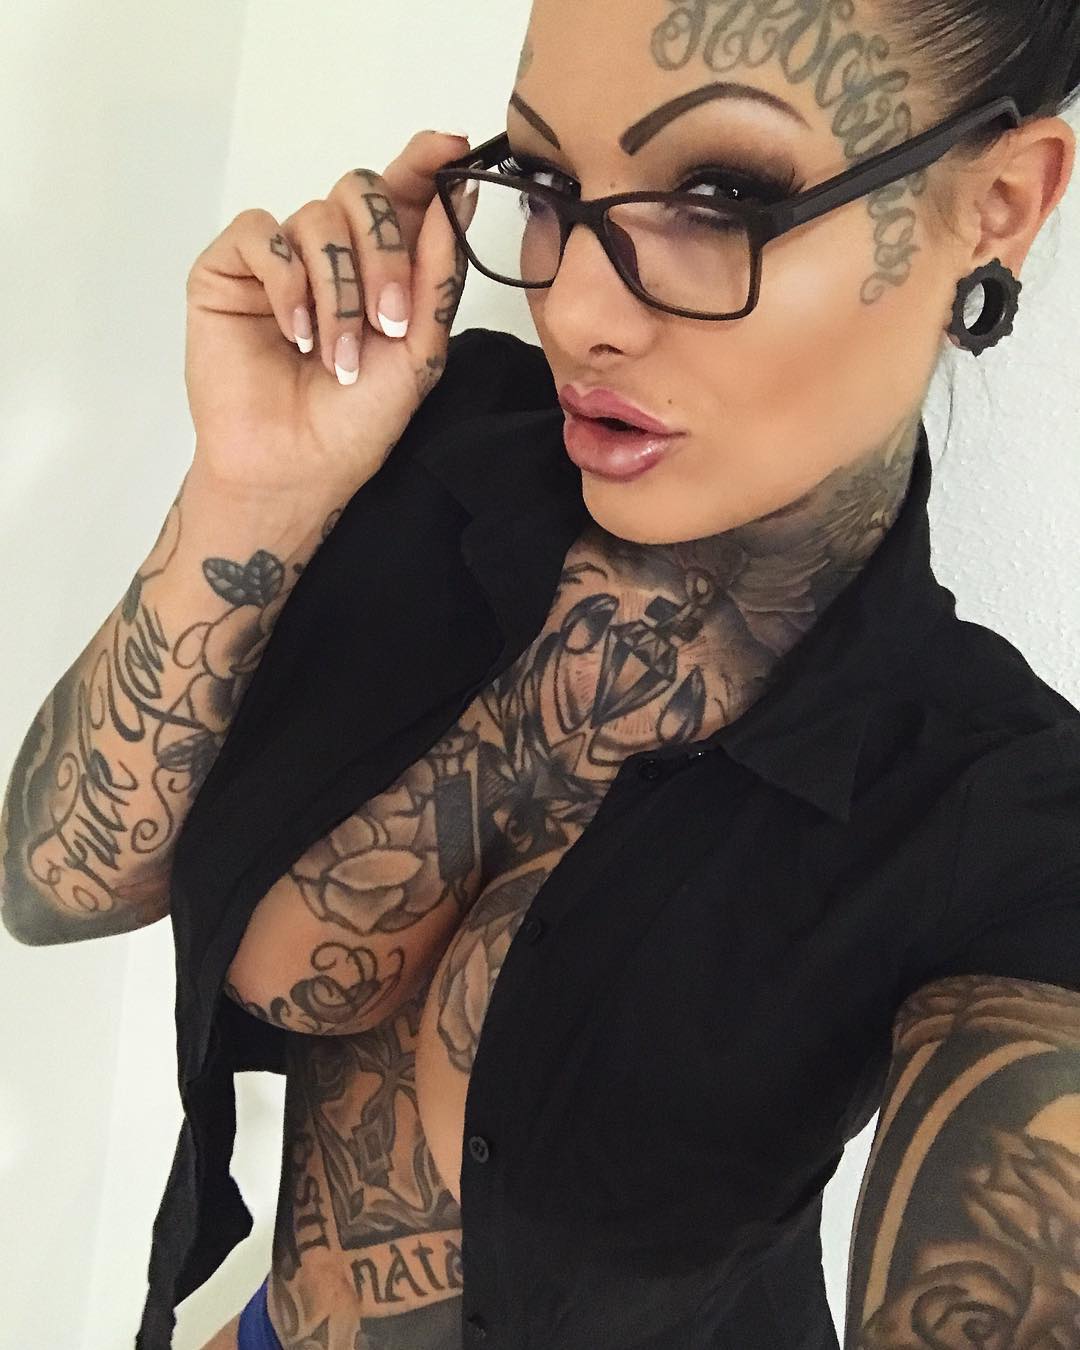 Meet Mara Inkperial- Model/Tattoo Artist From Germany